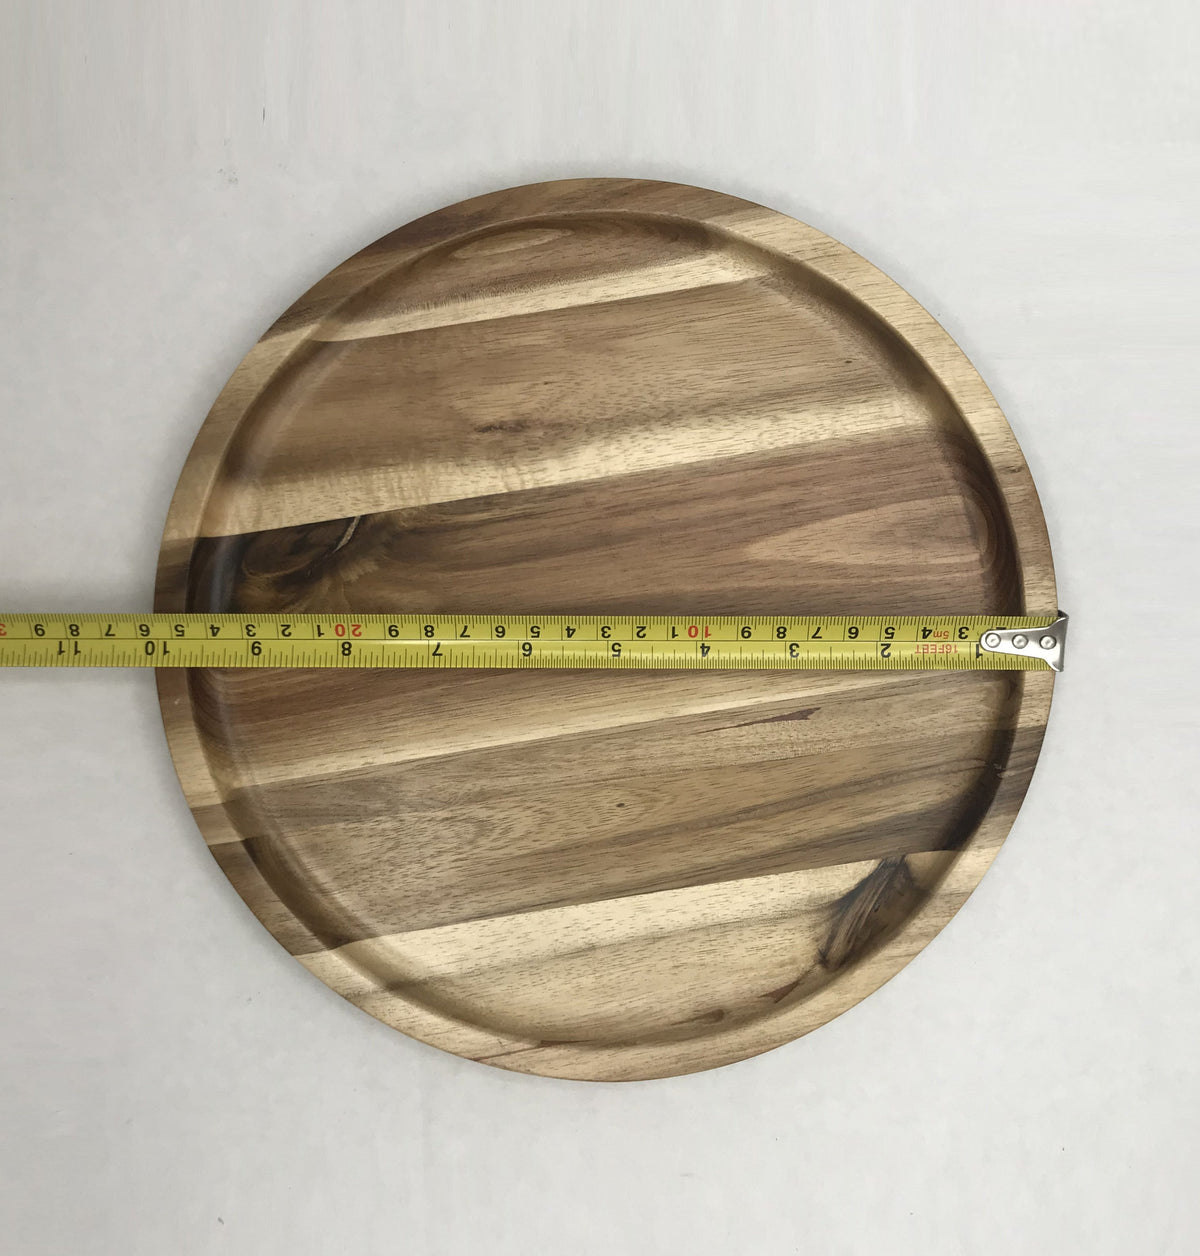 ZavisGreen Acacia round Plate / Platter 10" Diameter SKU: ZG-660010